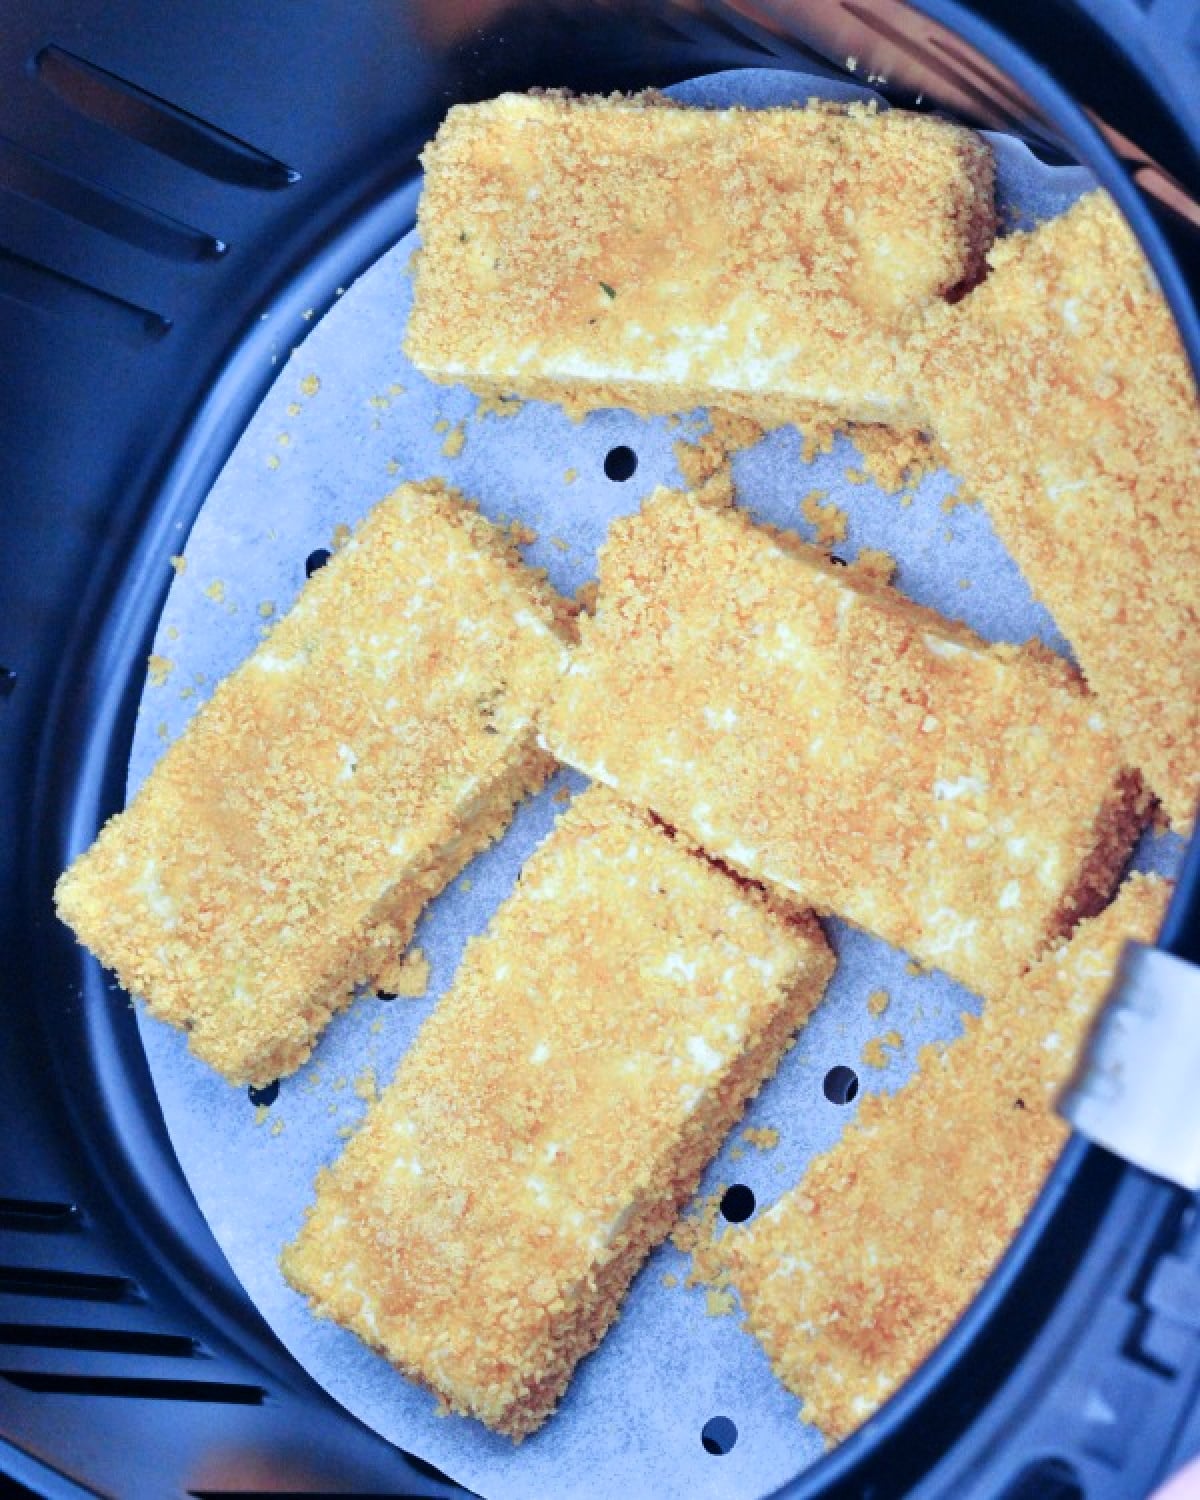 Several slices of crispy fried tofu on parchment inside an air fryer basket.